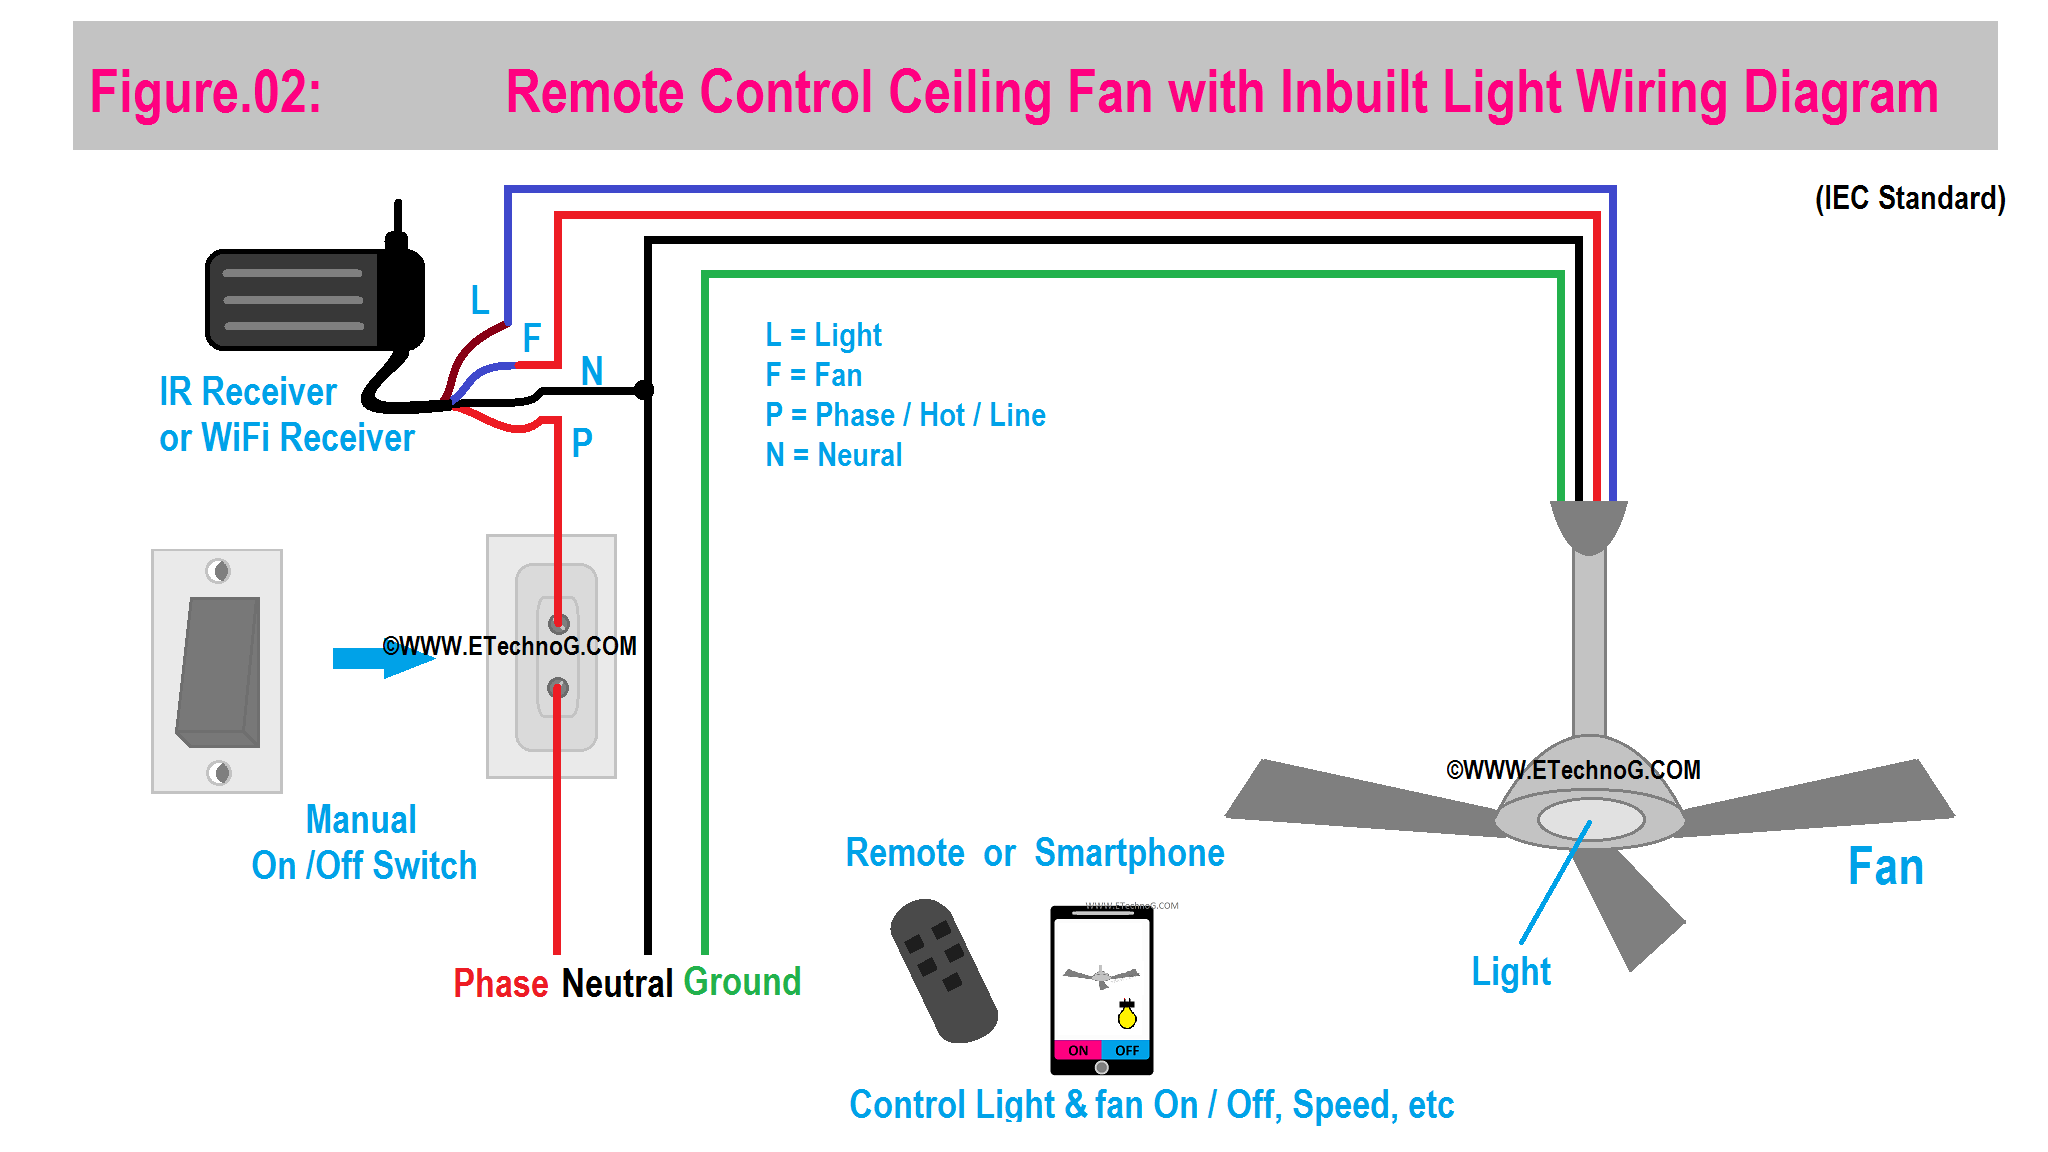 Remote Control Ceiling Fan with Inbuilt Light Wiring Diagram (IEC Standard)